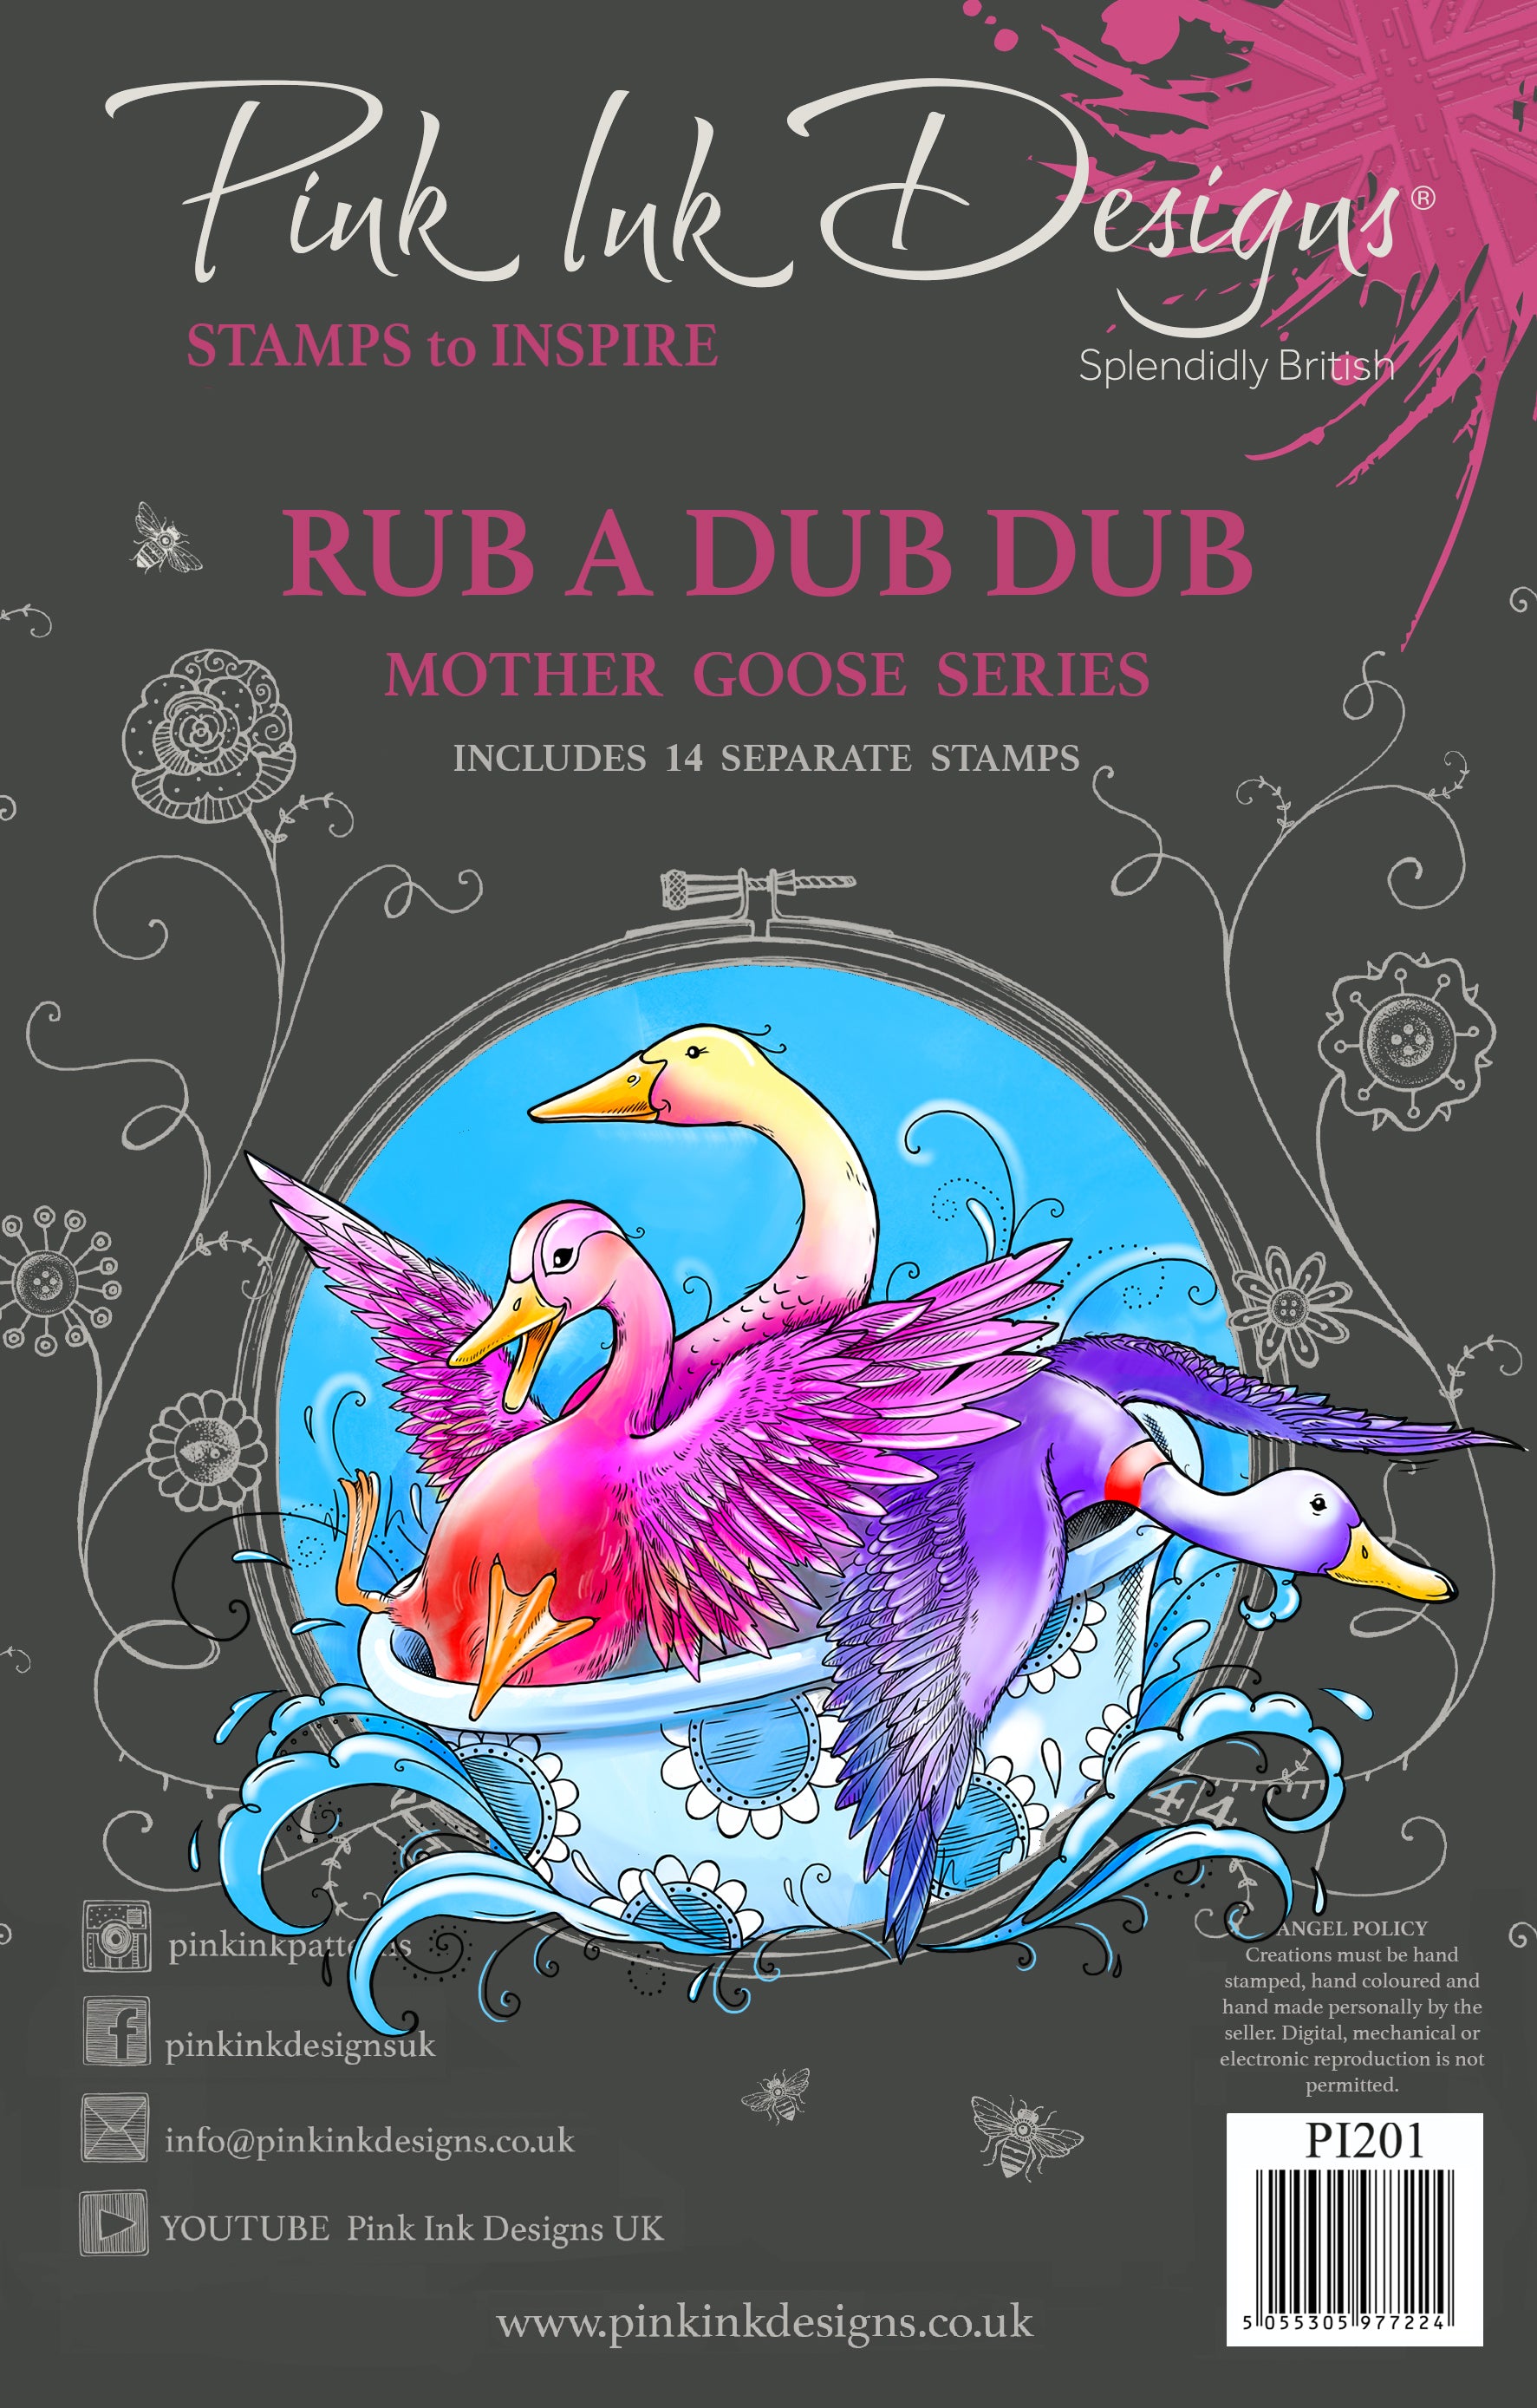 Pink Ink Designs Rub A Dub Dub 6 in x 8 in Clear Stamp Set